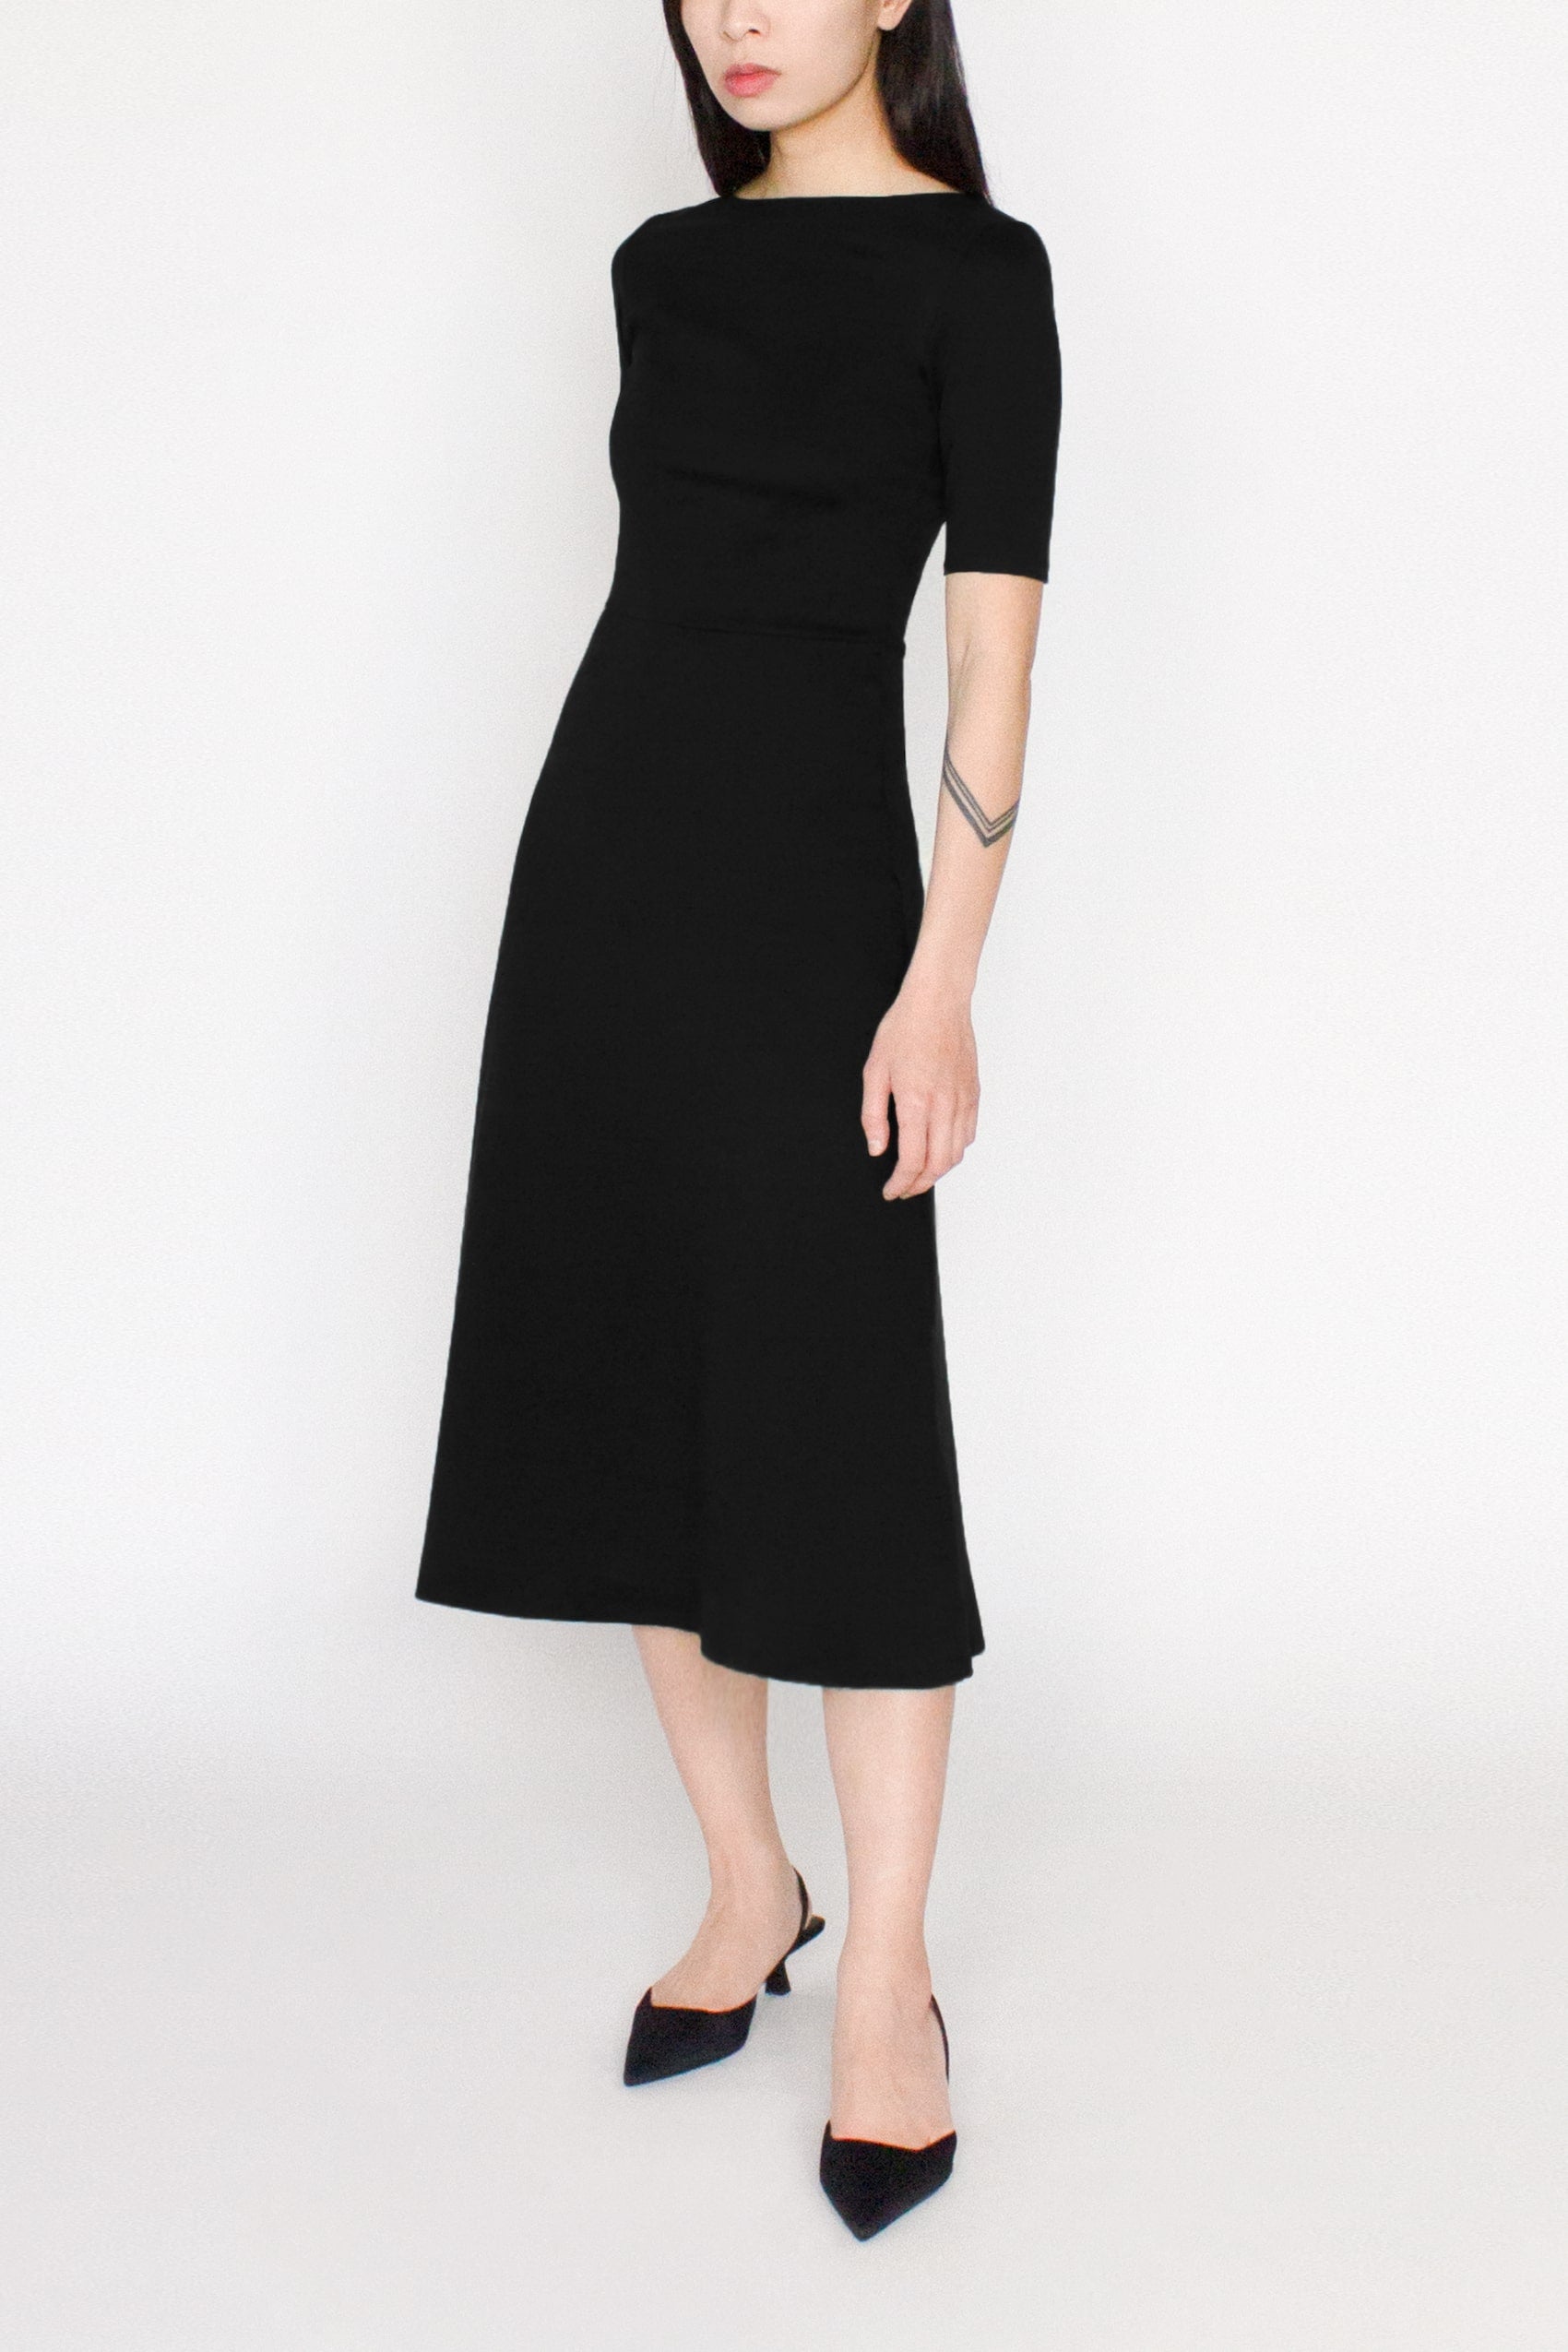 Half Sleeve BCI Cotton Boatneck Mid-calf Flared Dress -- Black